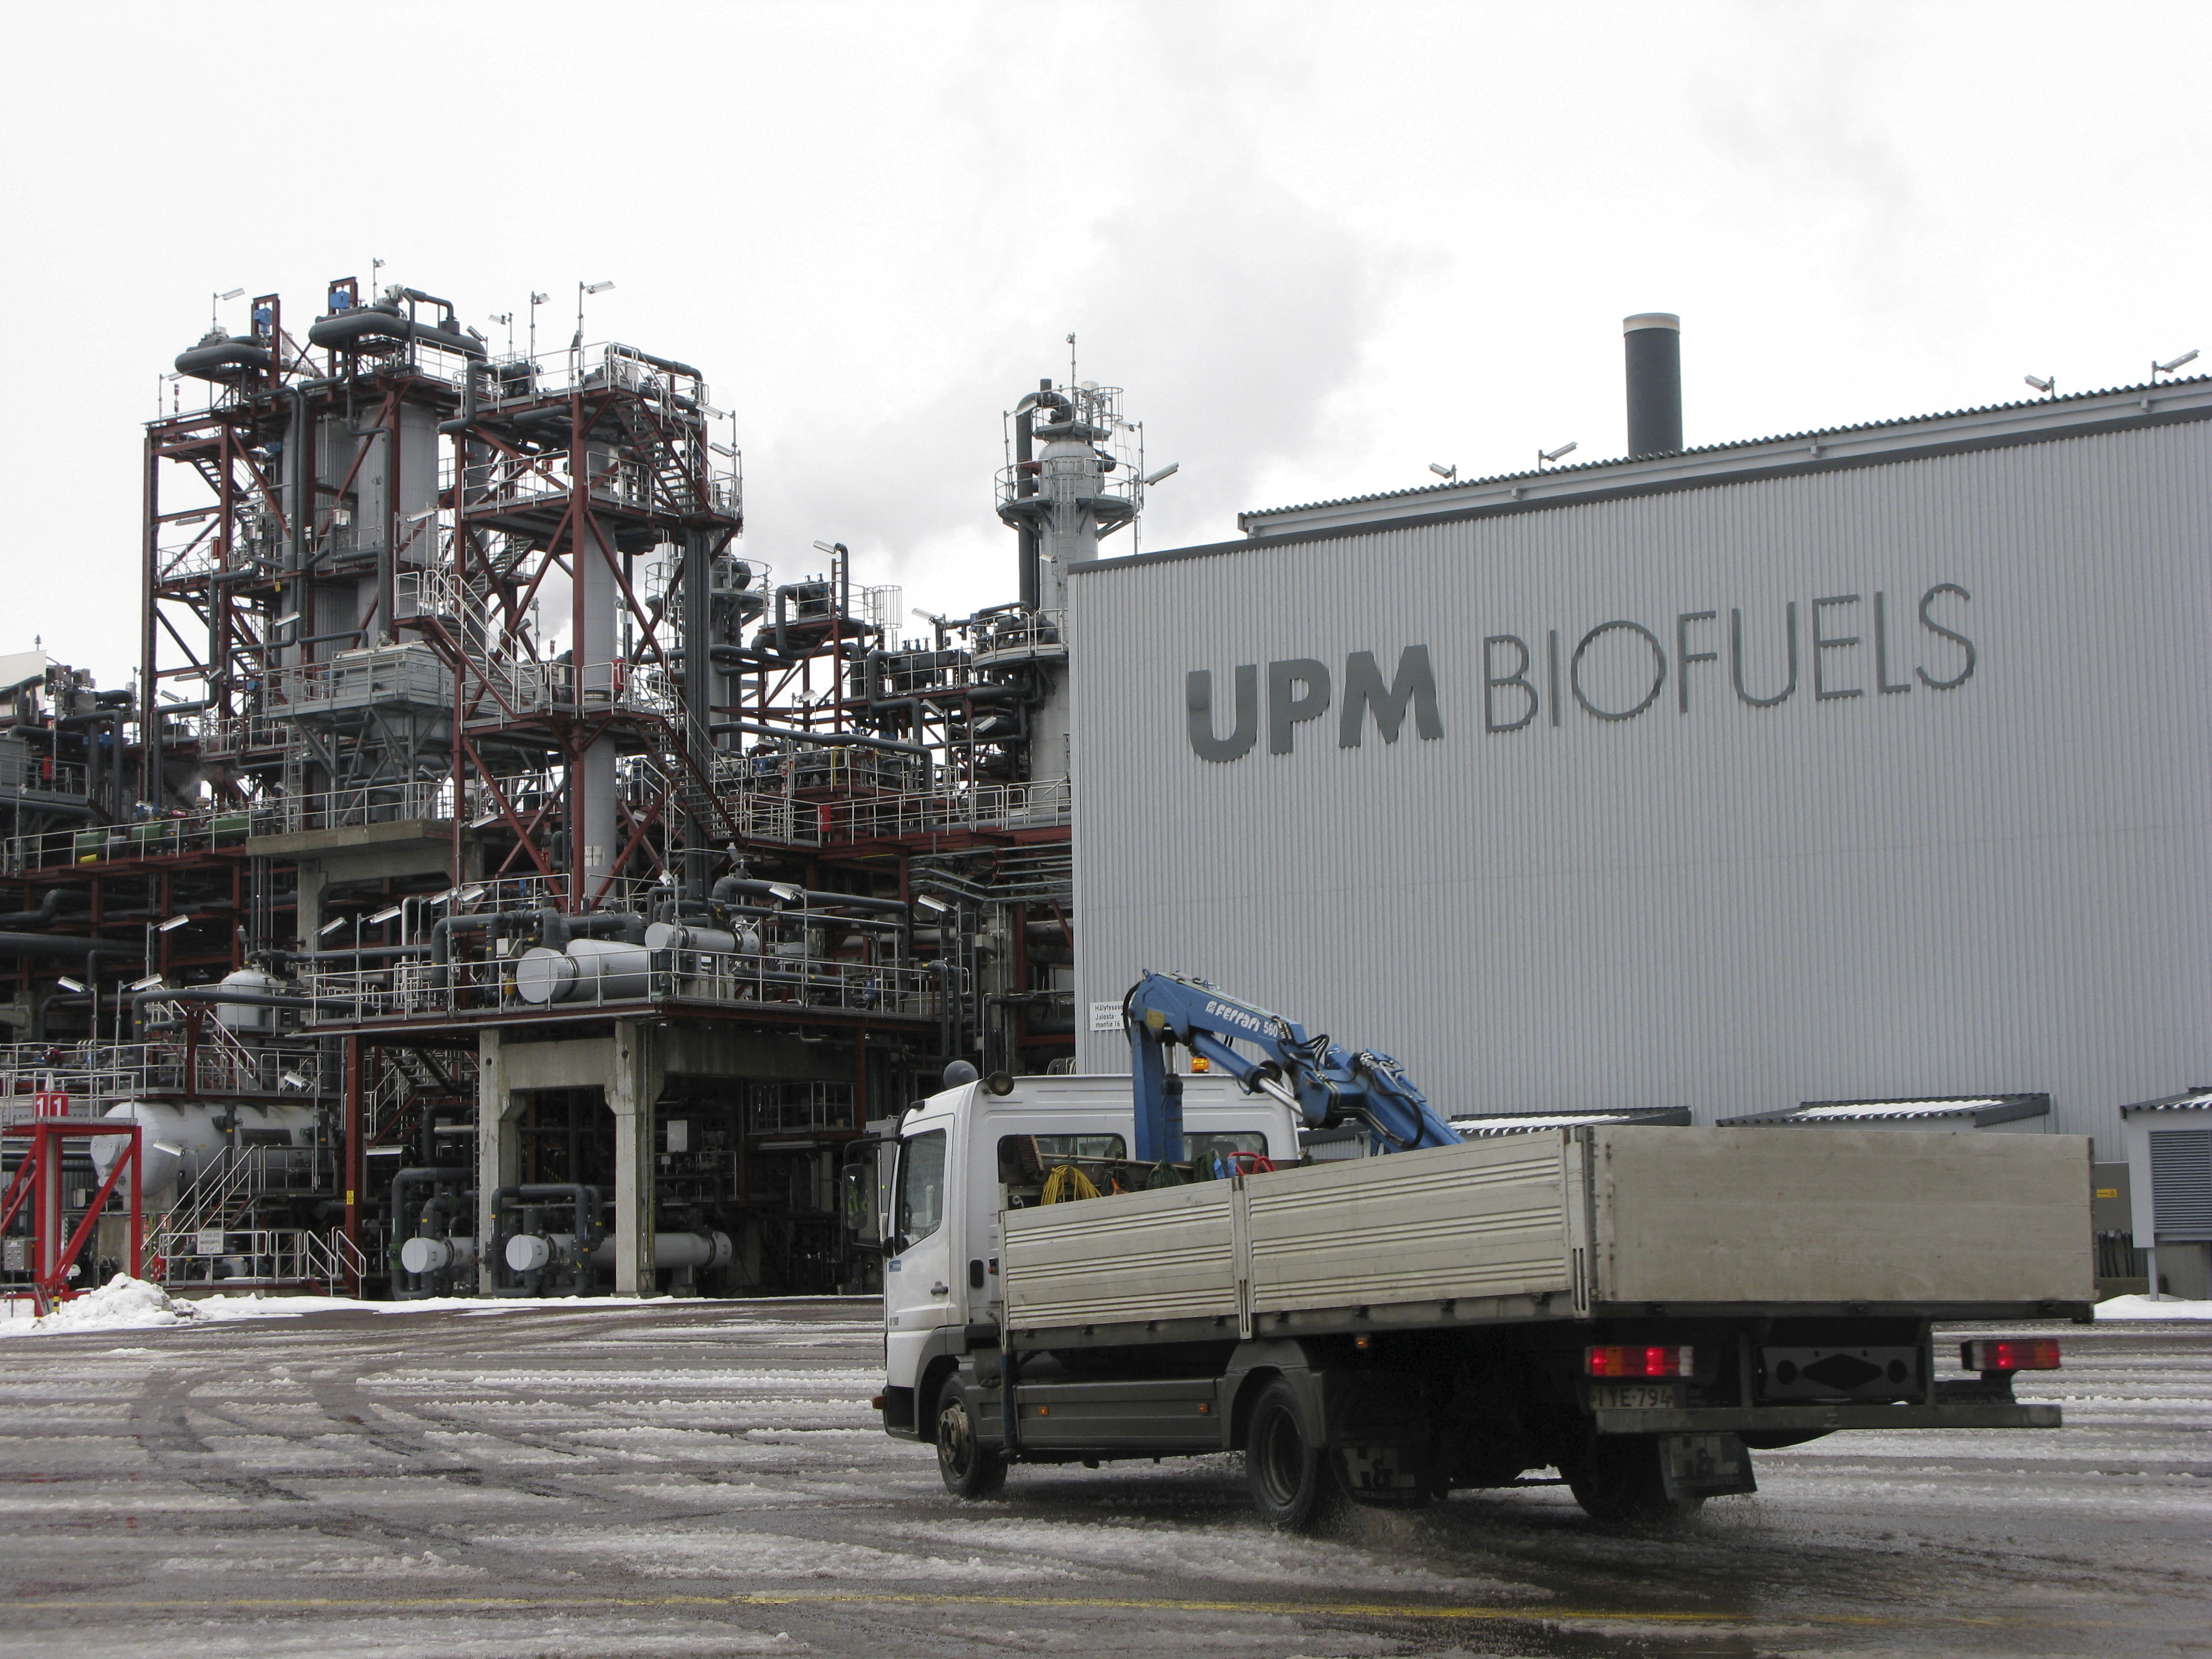 File photo of maintenance truck at UPM-Kymmeneis biofuel plant in Lappeenranta